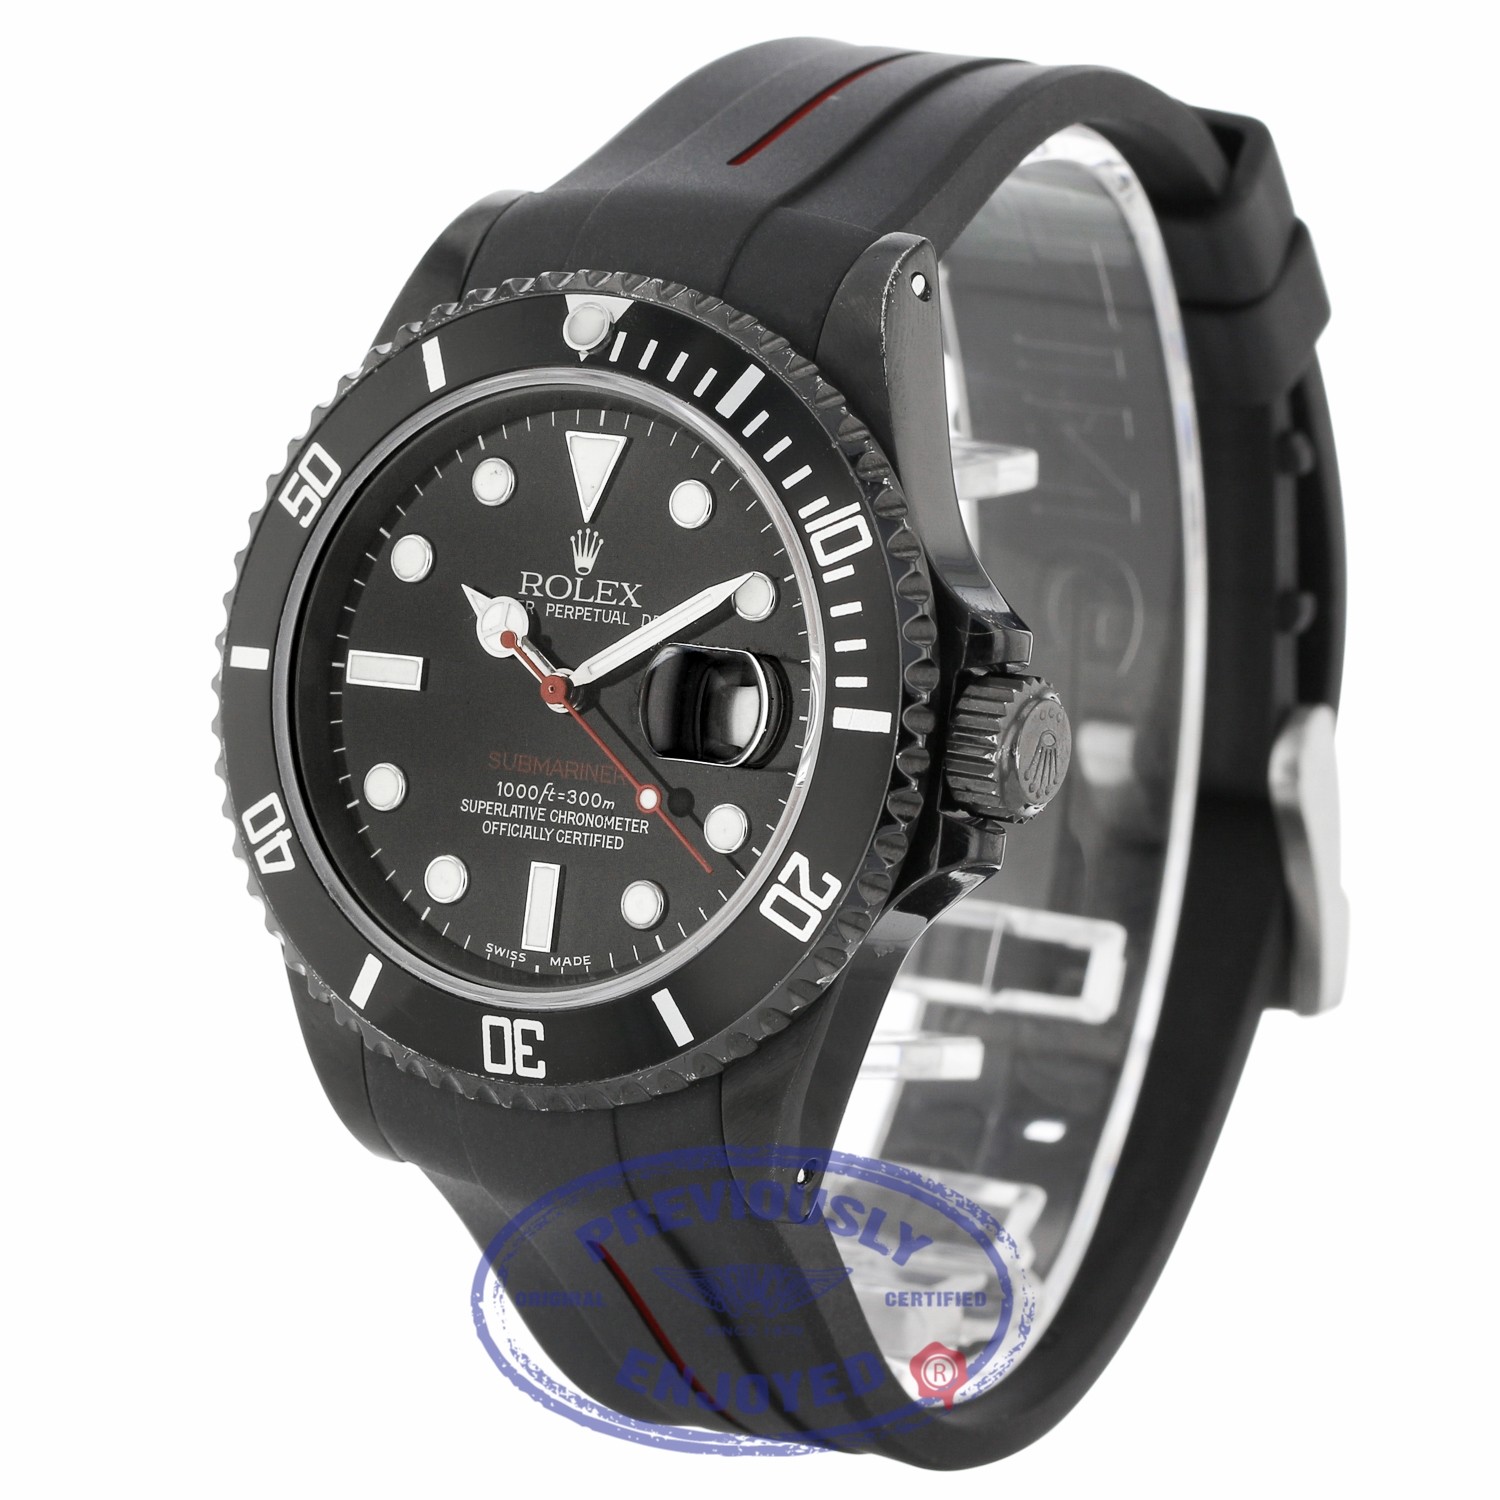 Rolex Submariner Stainless Steel Black DLC Coated Watch 16610 